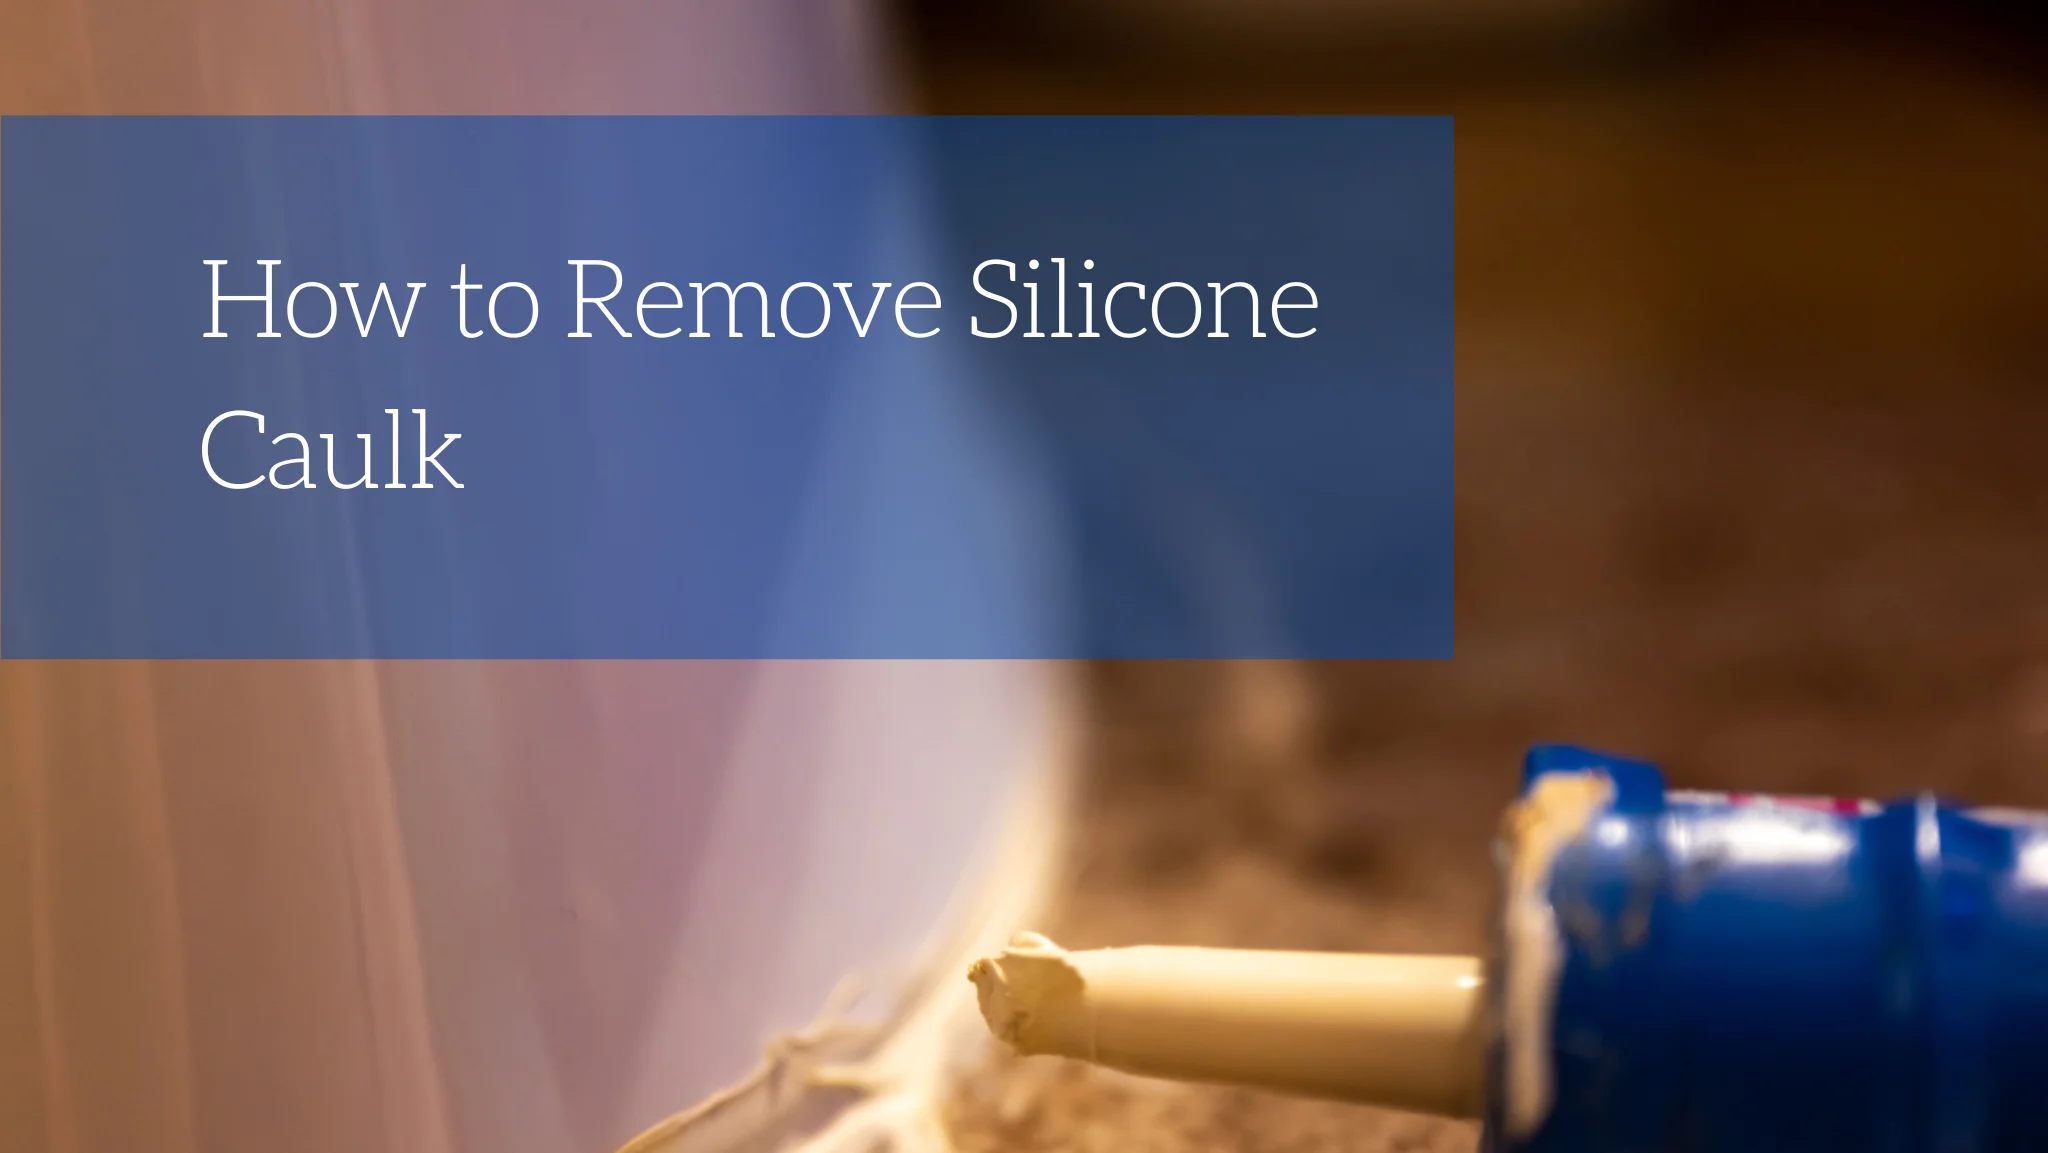 How to Remove Silicone Caulk